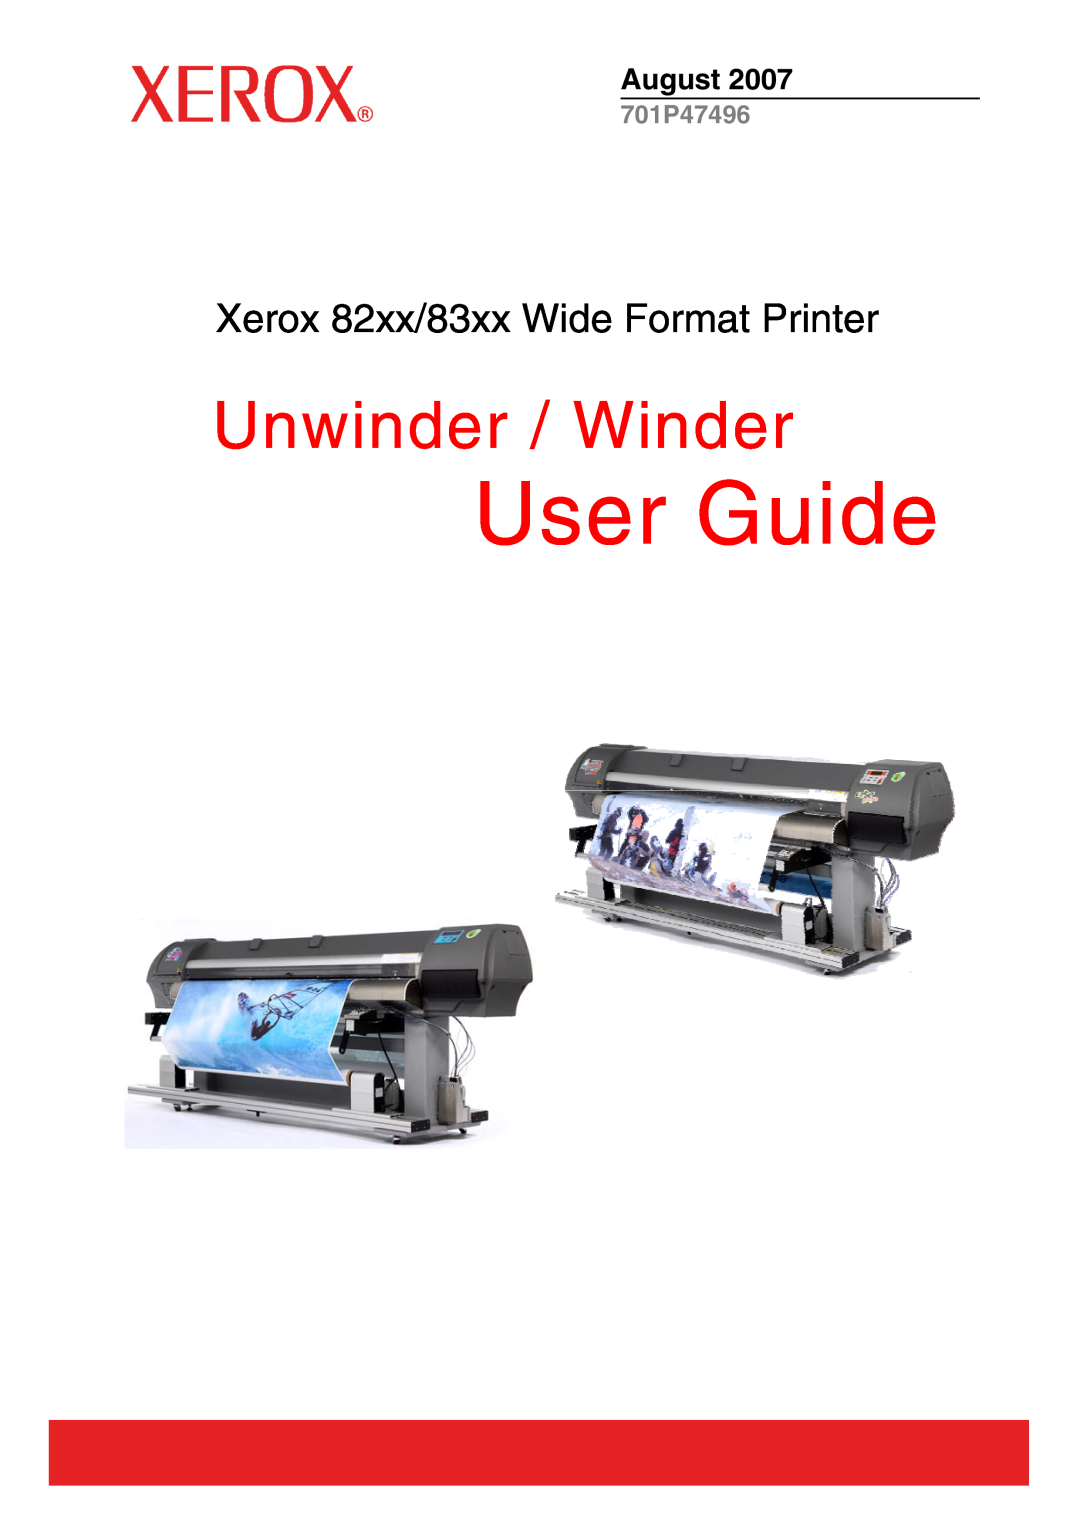 Xerox manual User Guide, Unwinder / Winder, Xerox 82xx/83xx Wide Format Printer, August, 701P47496 